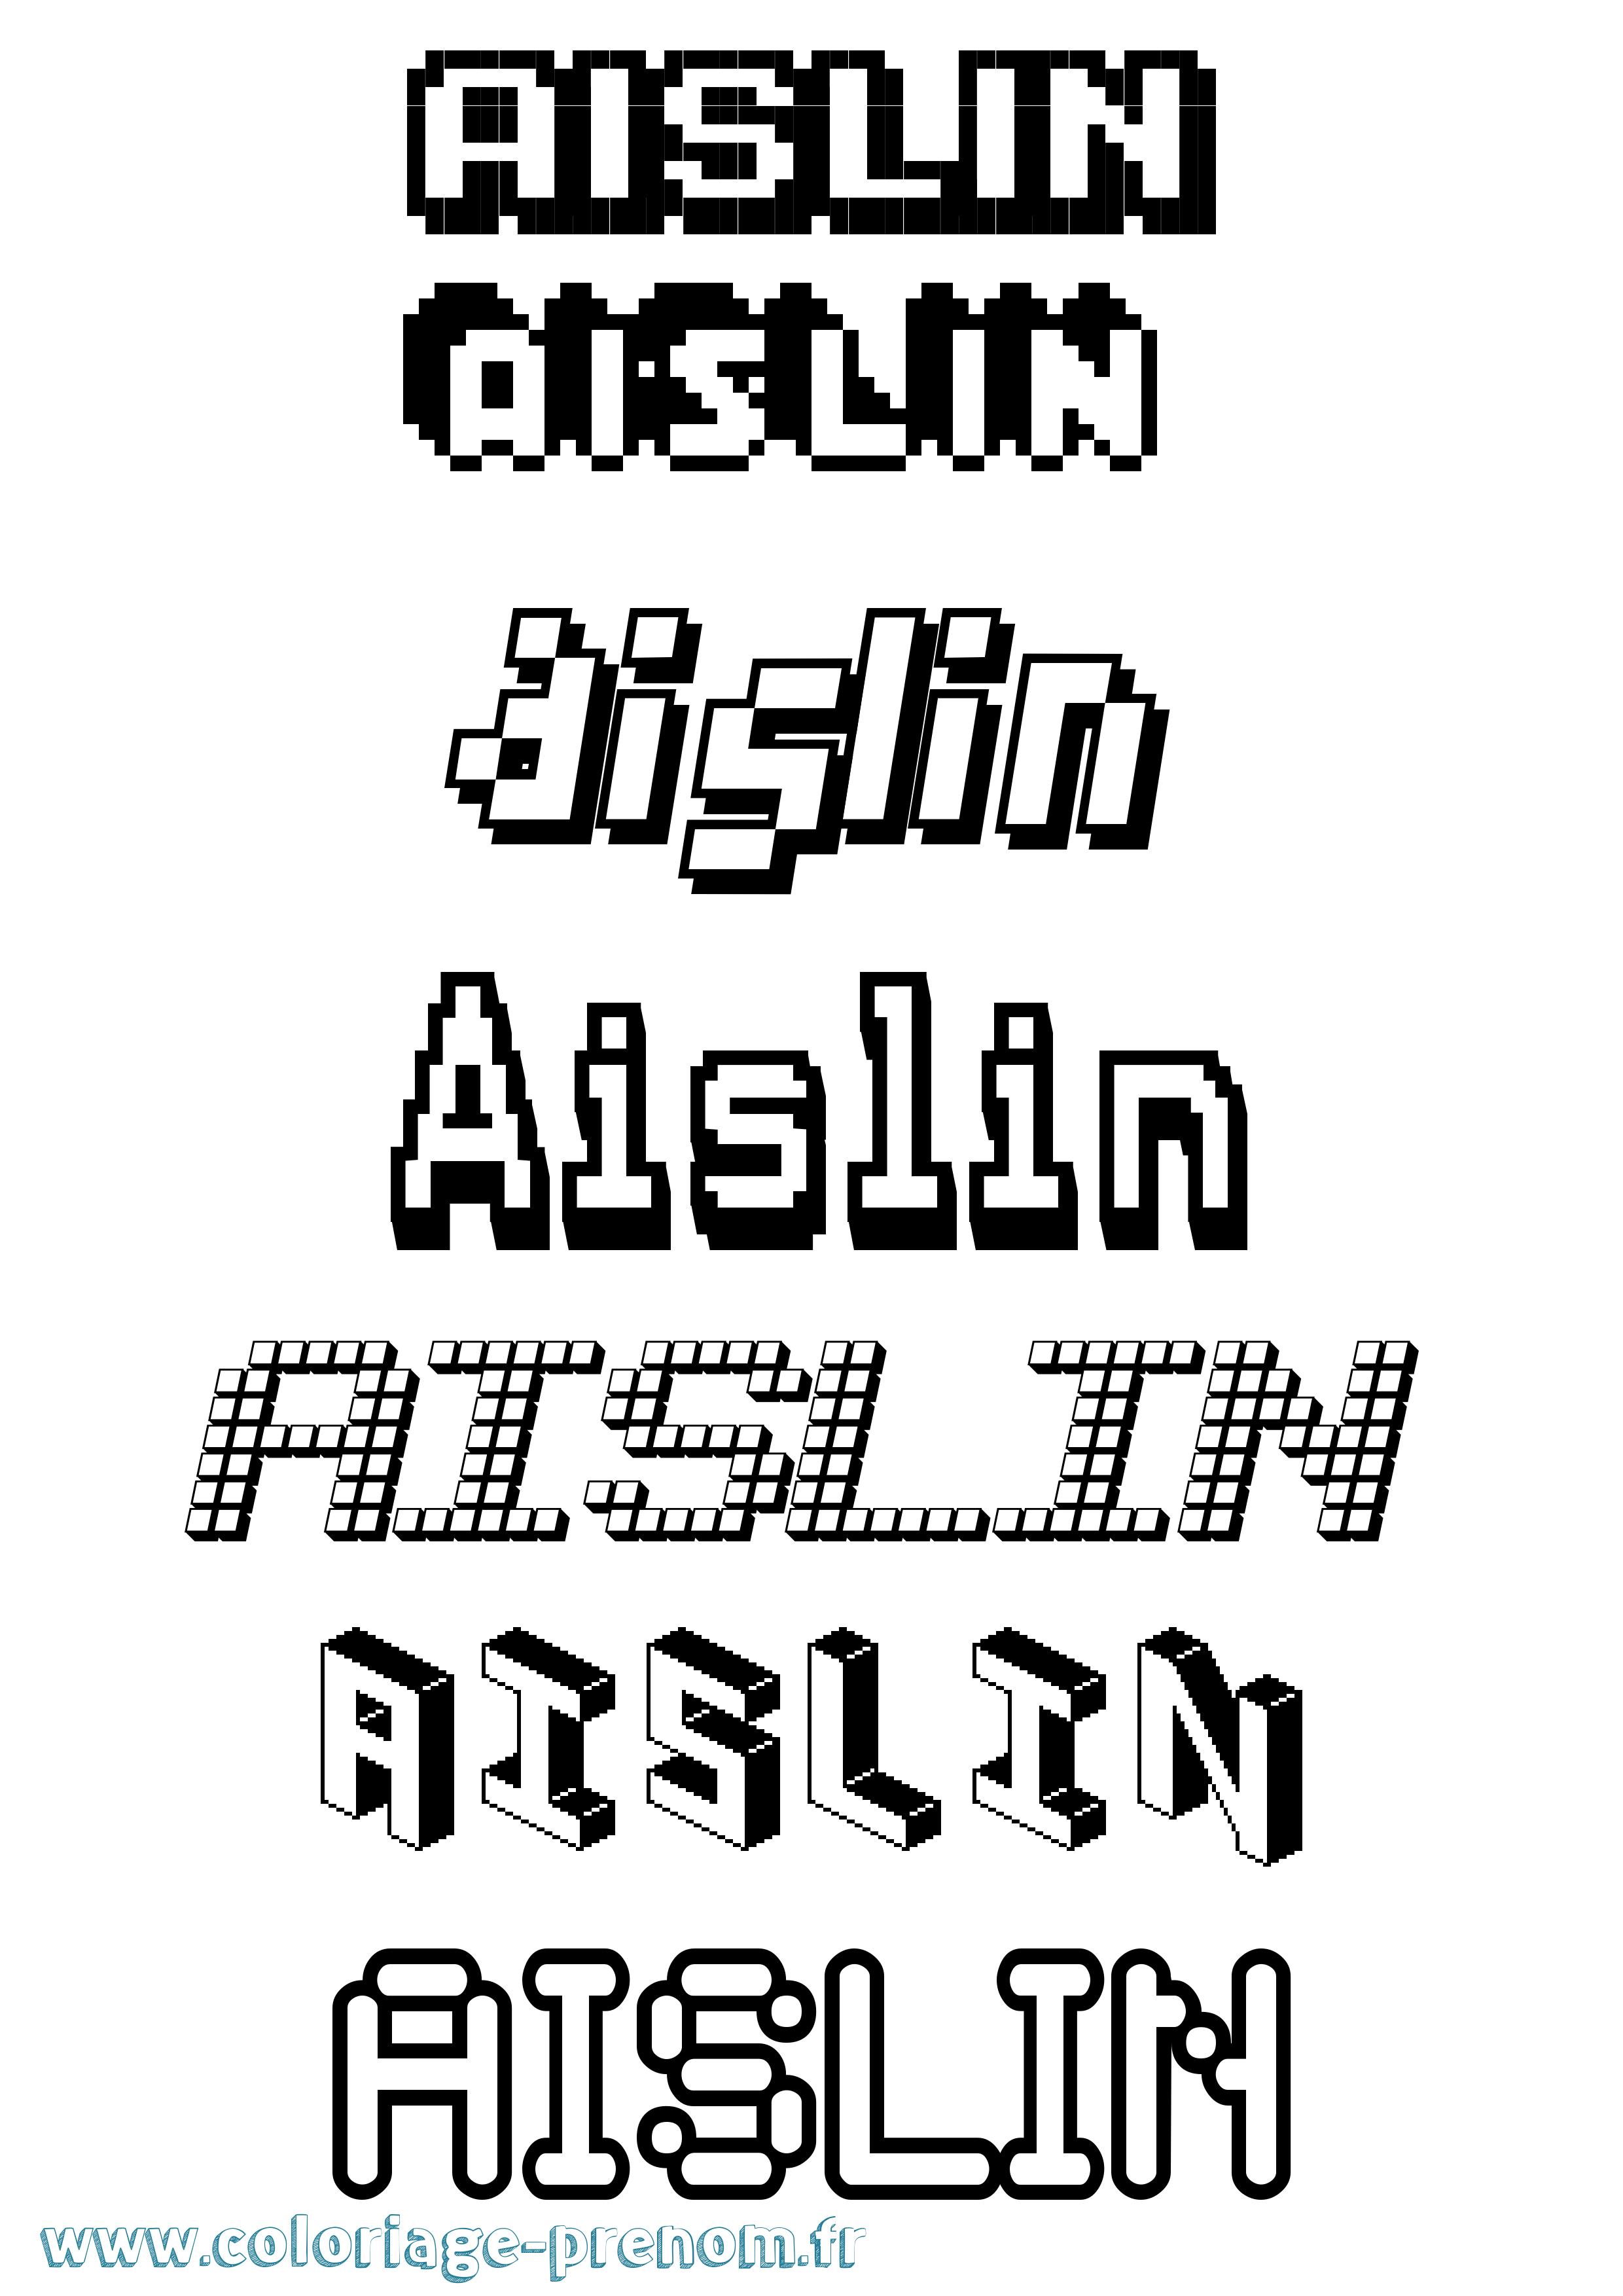 Coloriage prénom Aislin Pixel